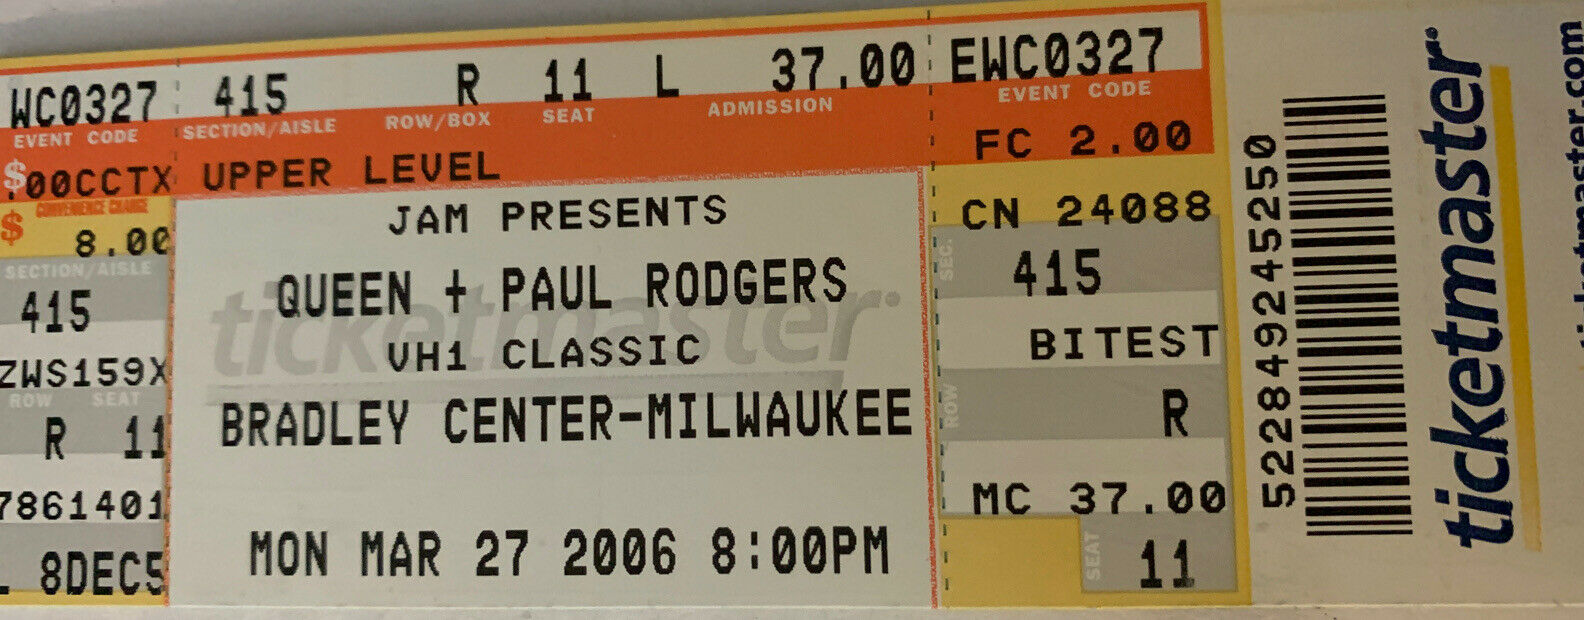 Queen + Paul Rodgers Full Unused Ticket Bradley Center Milwaukee Wi